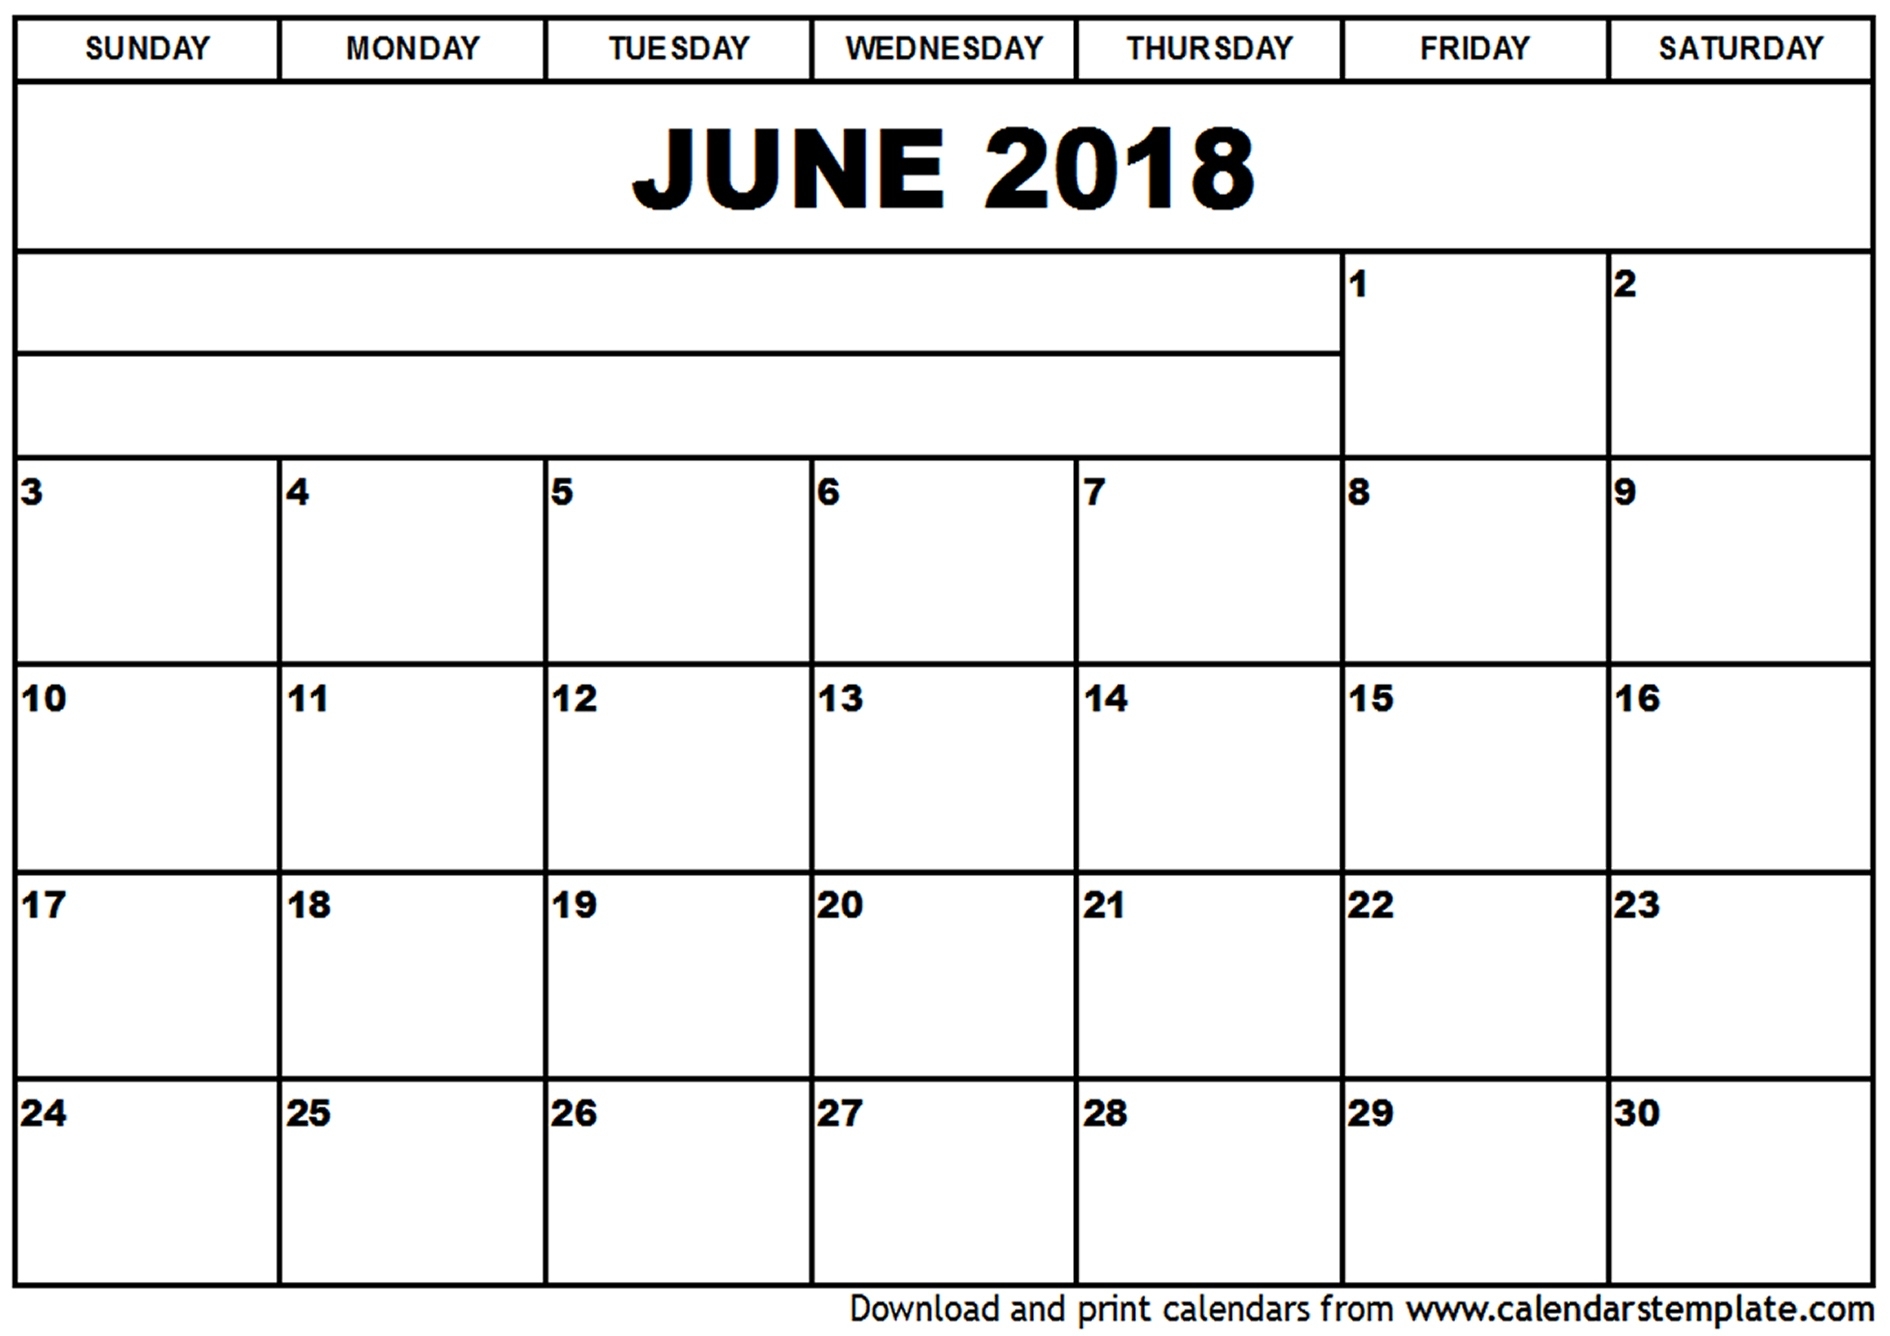 June 2018 Calendar Template | Year Printable Calendar Templates For Free Printable Calendars